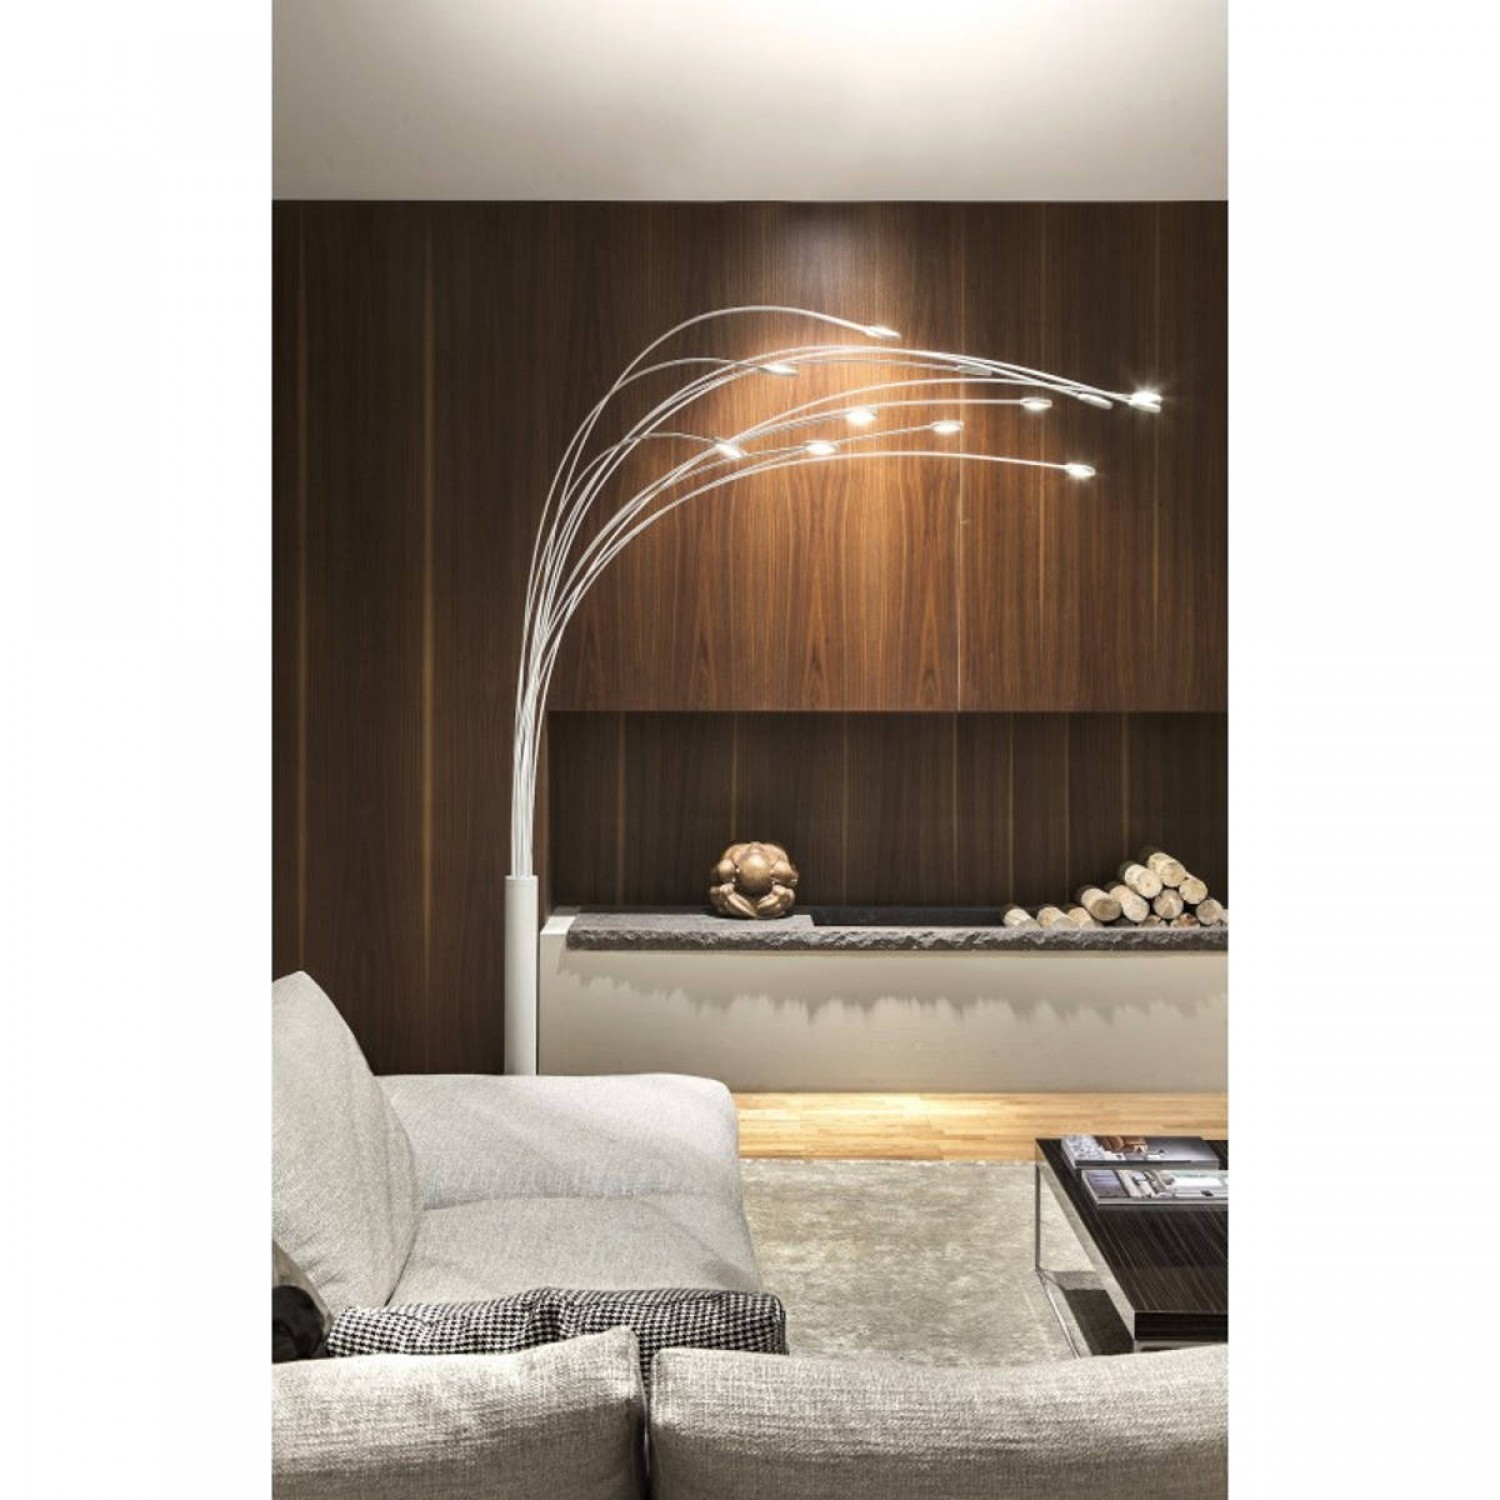 Raffinata Lampada da terra di colore bianco, 12 luci orientabili a led (  6420Lm ) con dimmer, acquista online Pierlux Illuminazione